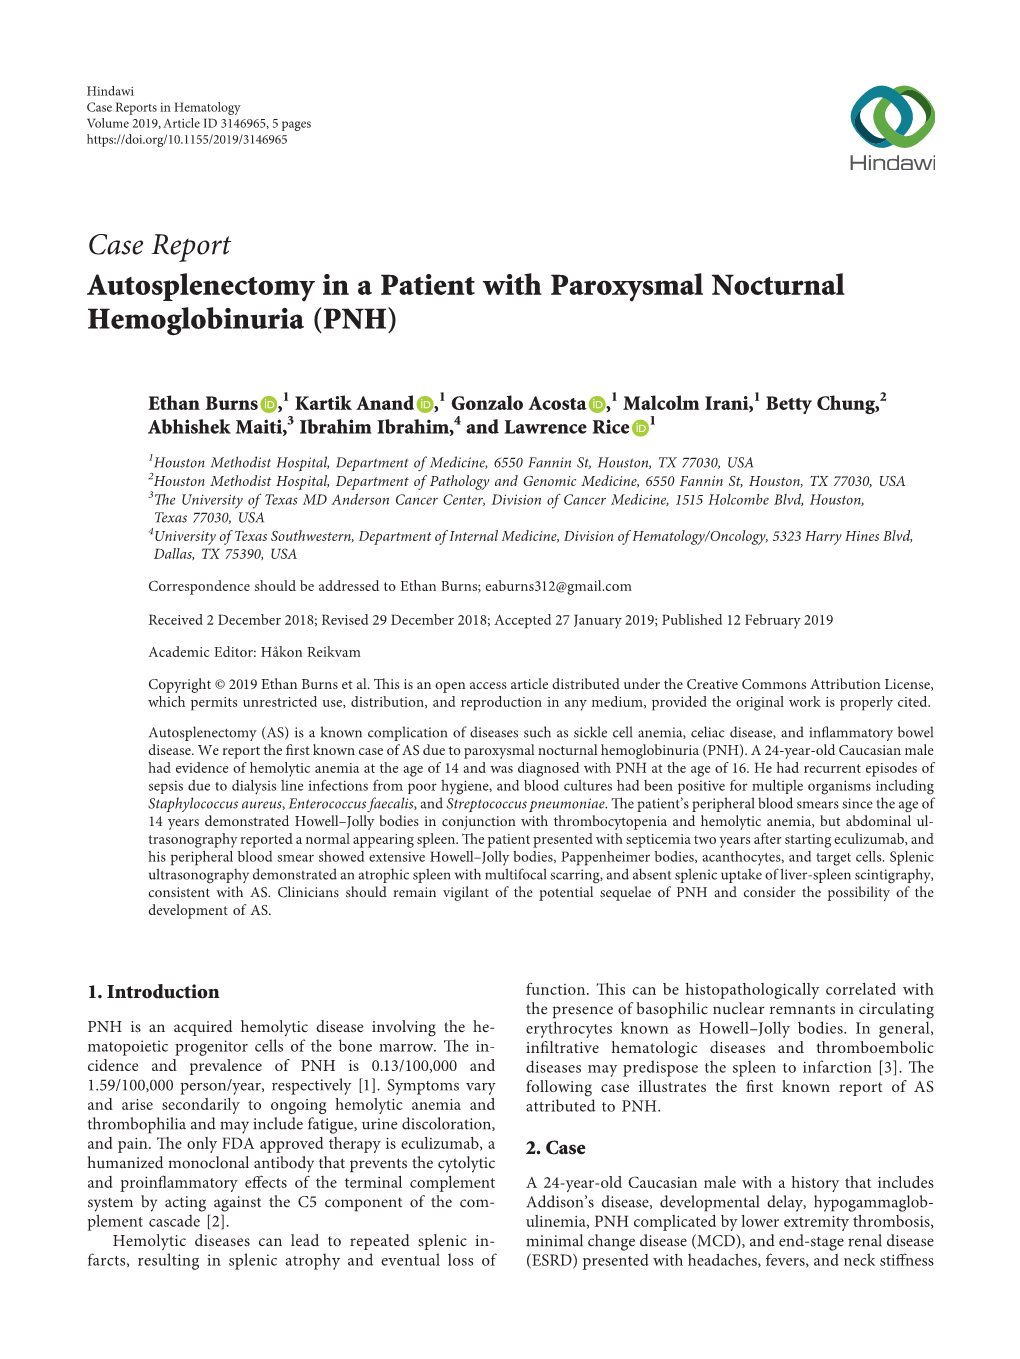 Autosplenectomy in a Patient with Paroxysmal Nocturnal Hemoglobinuria (PNH)